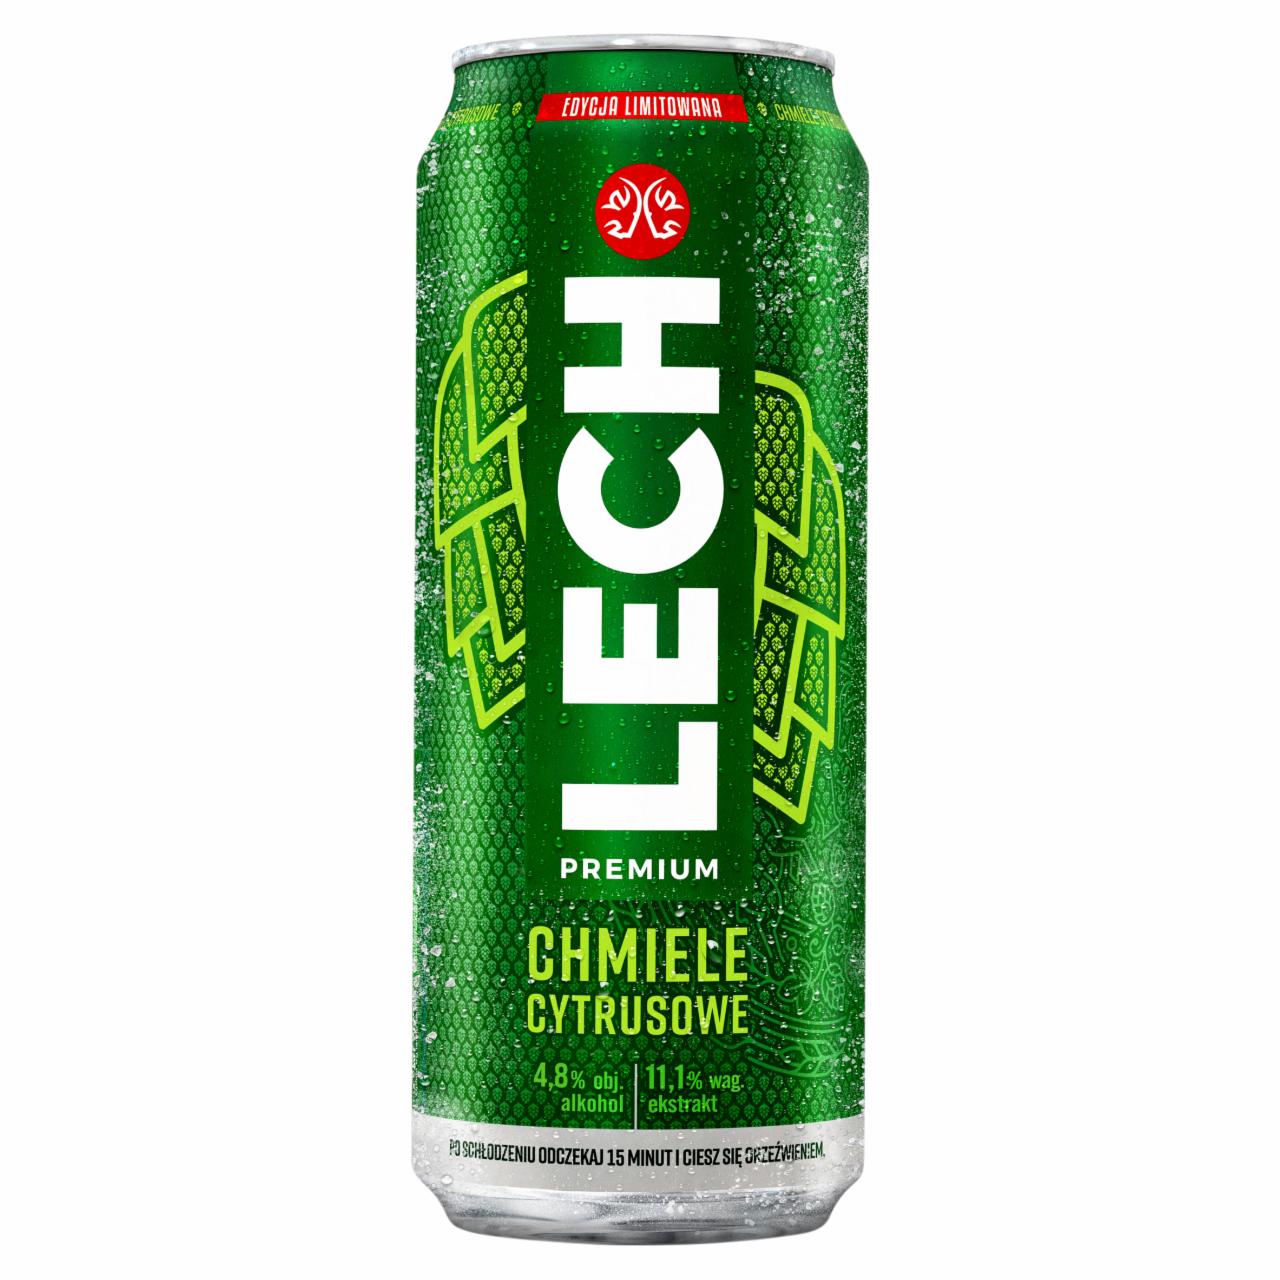 Zdjęcia - Lech Premium Piwo jasne chmiele cytrusowe 500 ml